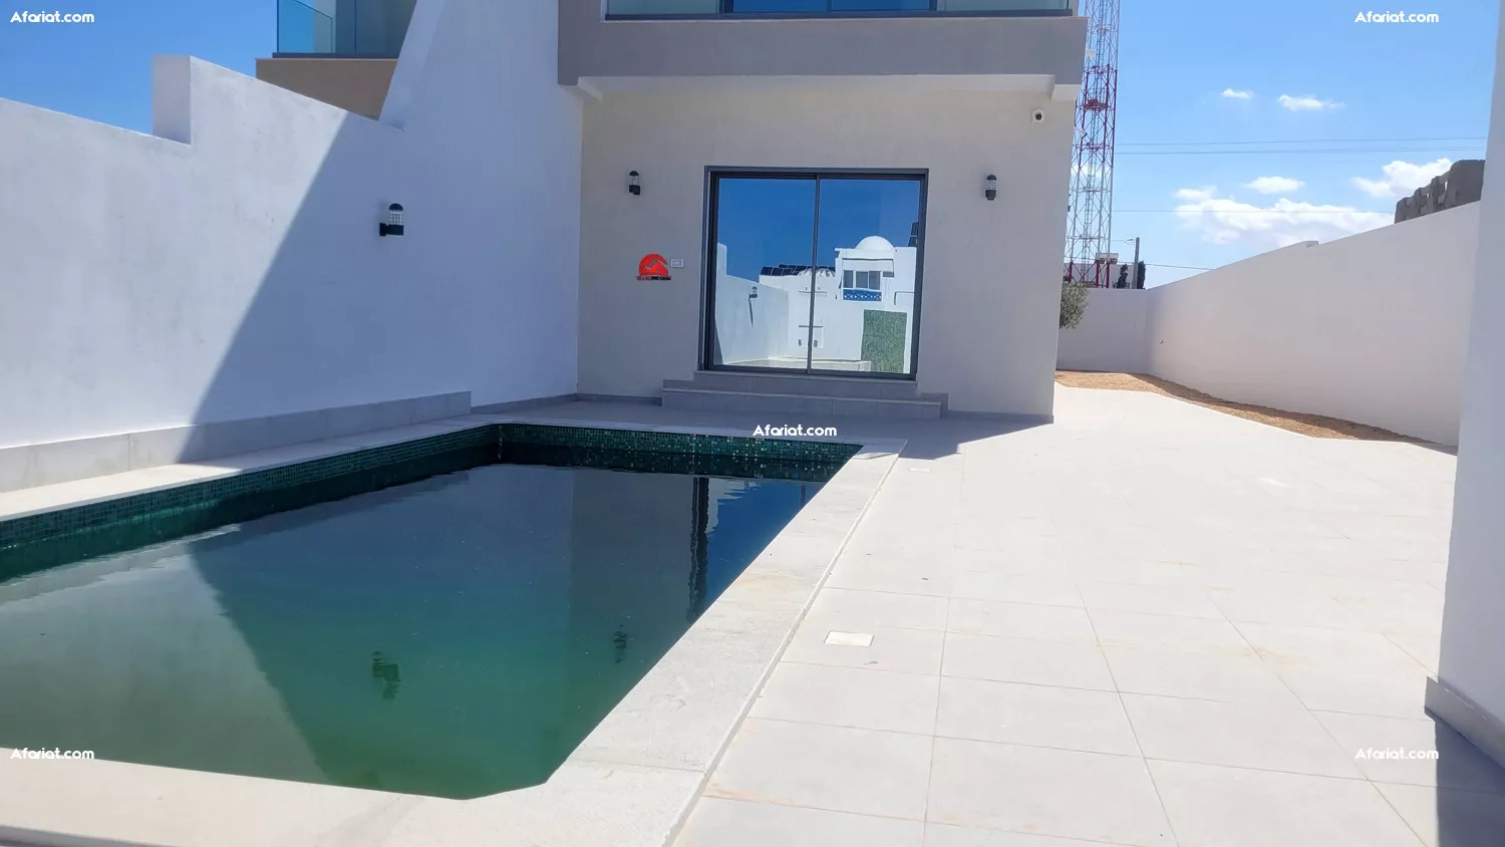 Vente villa neuve avec piscine à houmt souk djerba – réf v 628